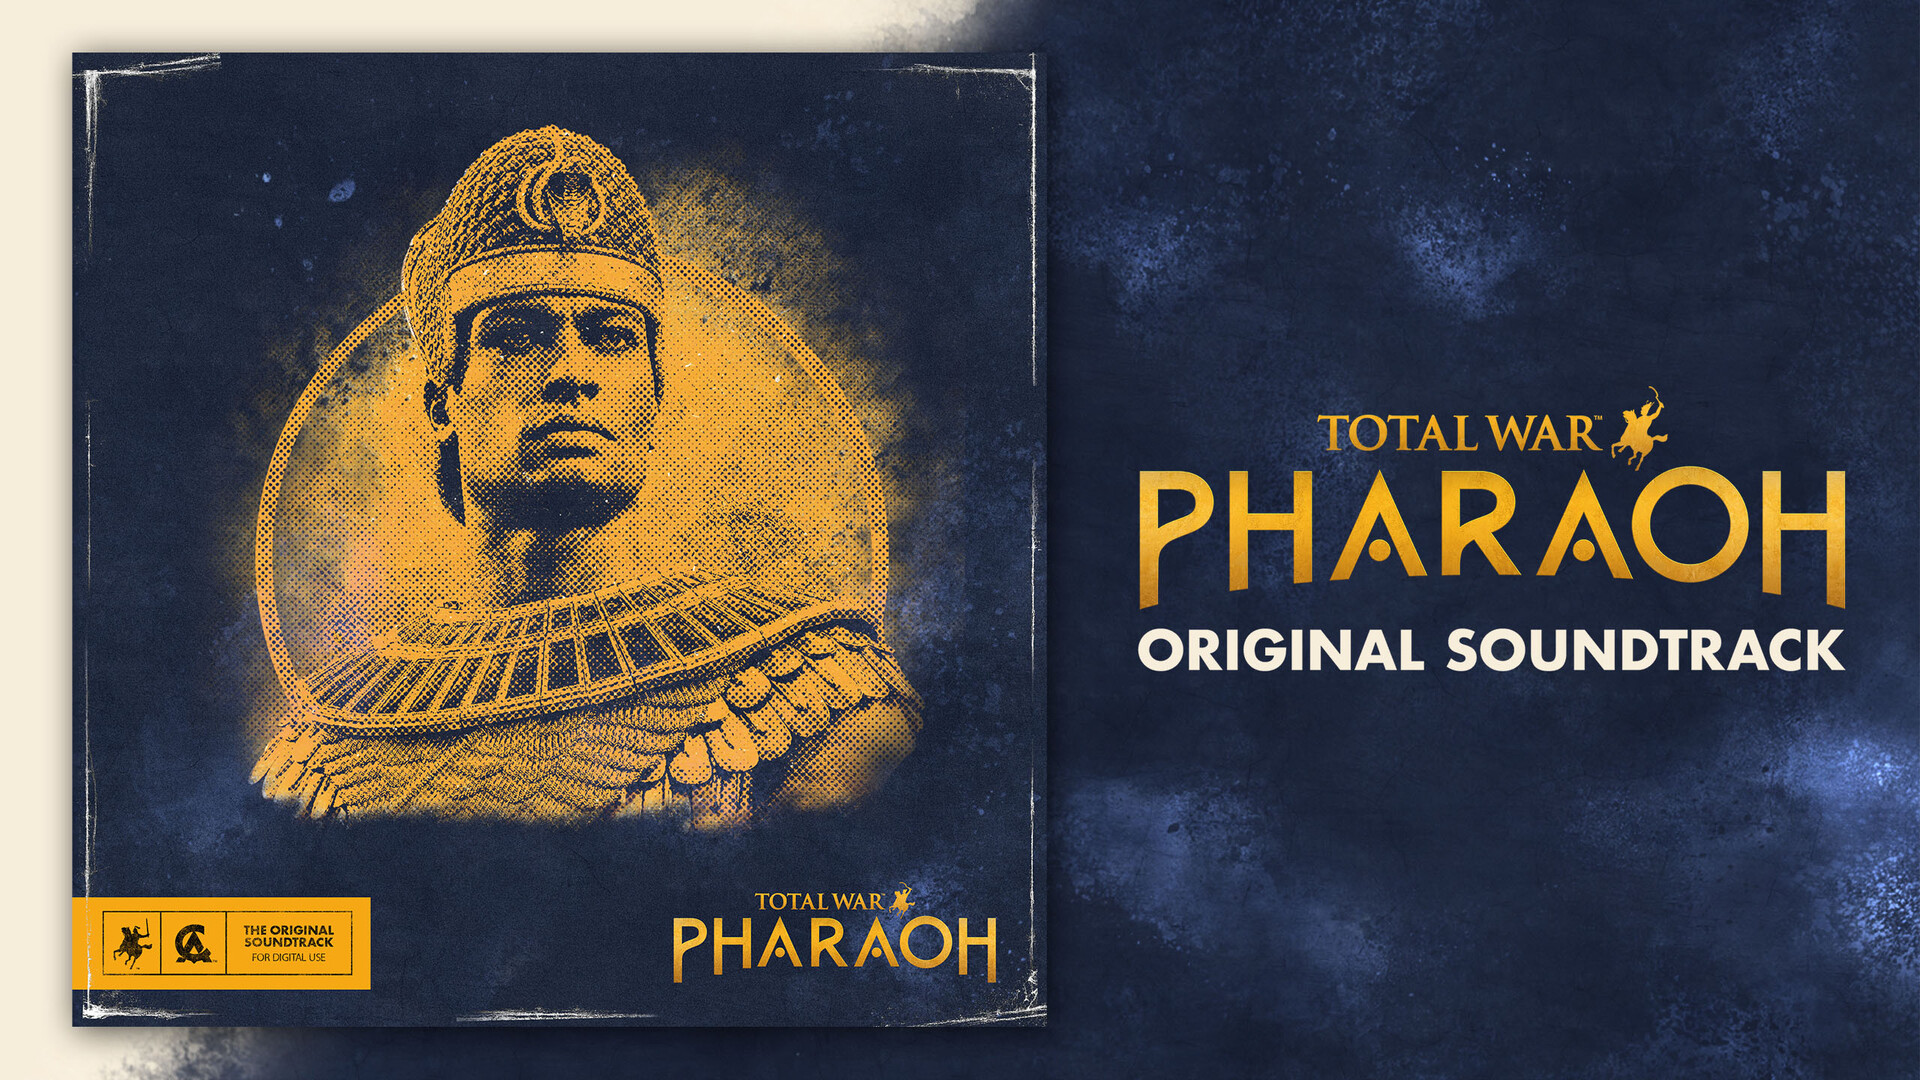 Total War: PHARAOH - Soundtrack Featured Screenshot #1